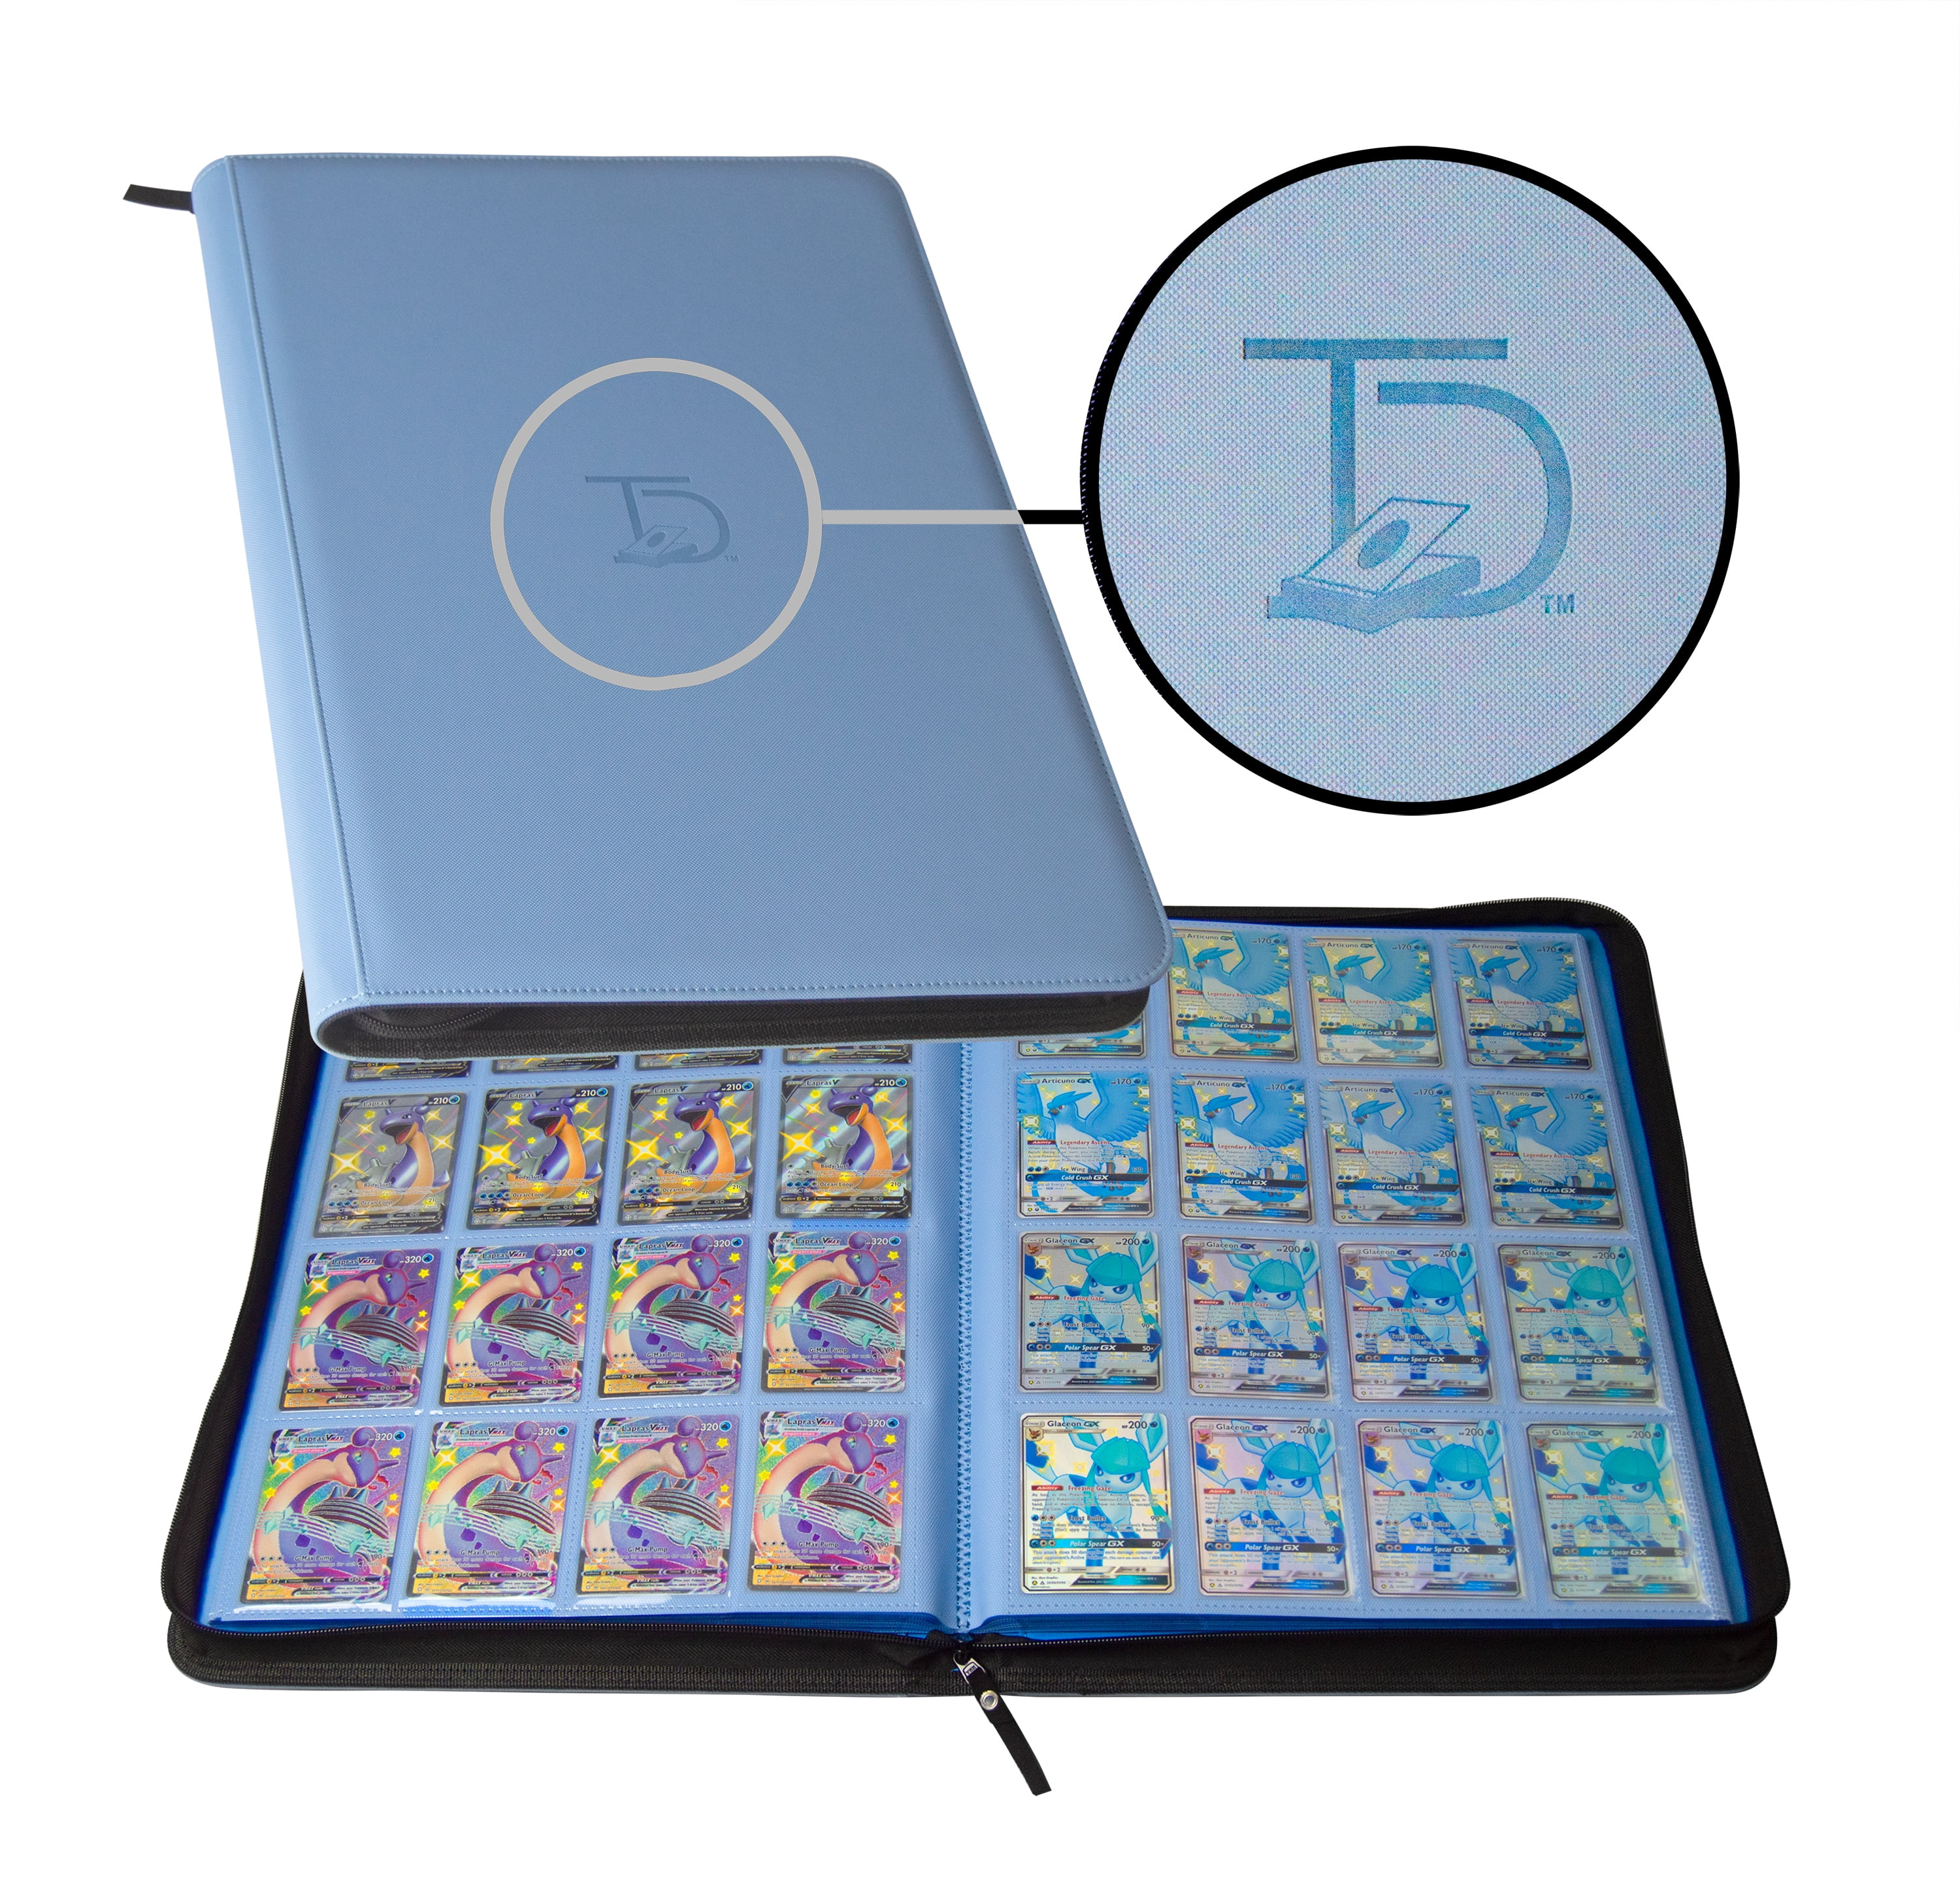 Lot of 5 x pokemon binder for storage 2160 cards 